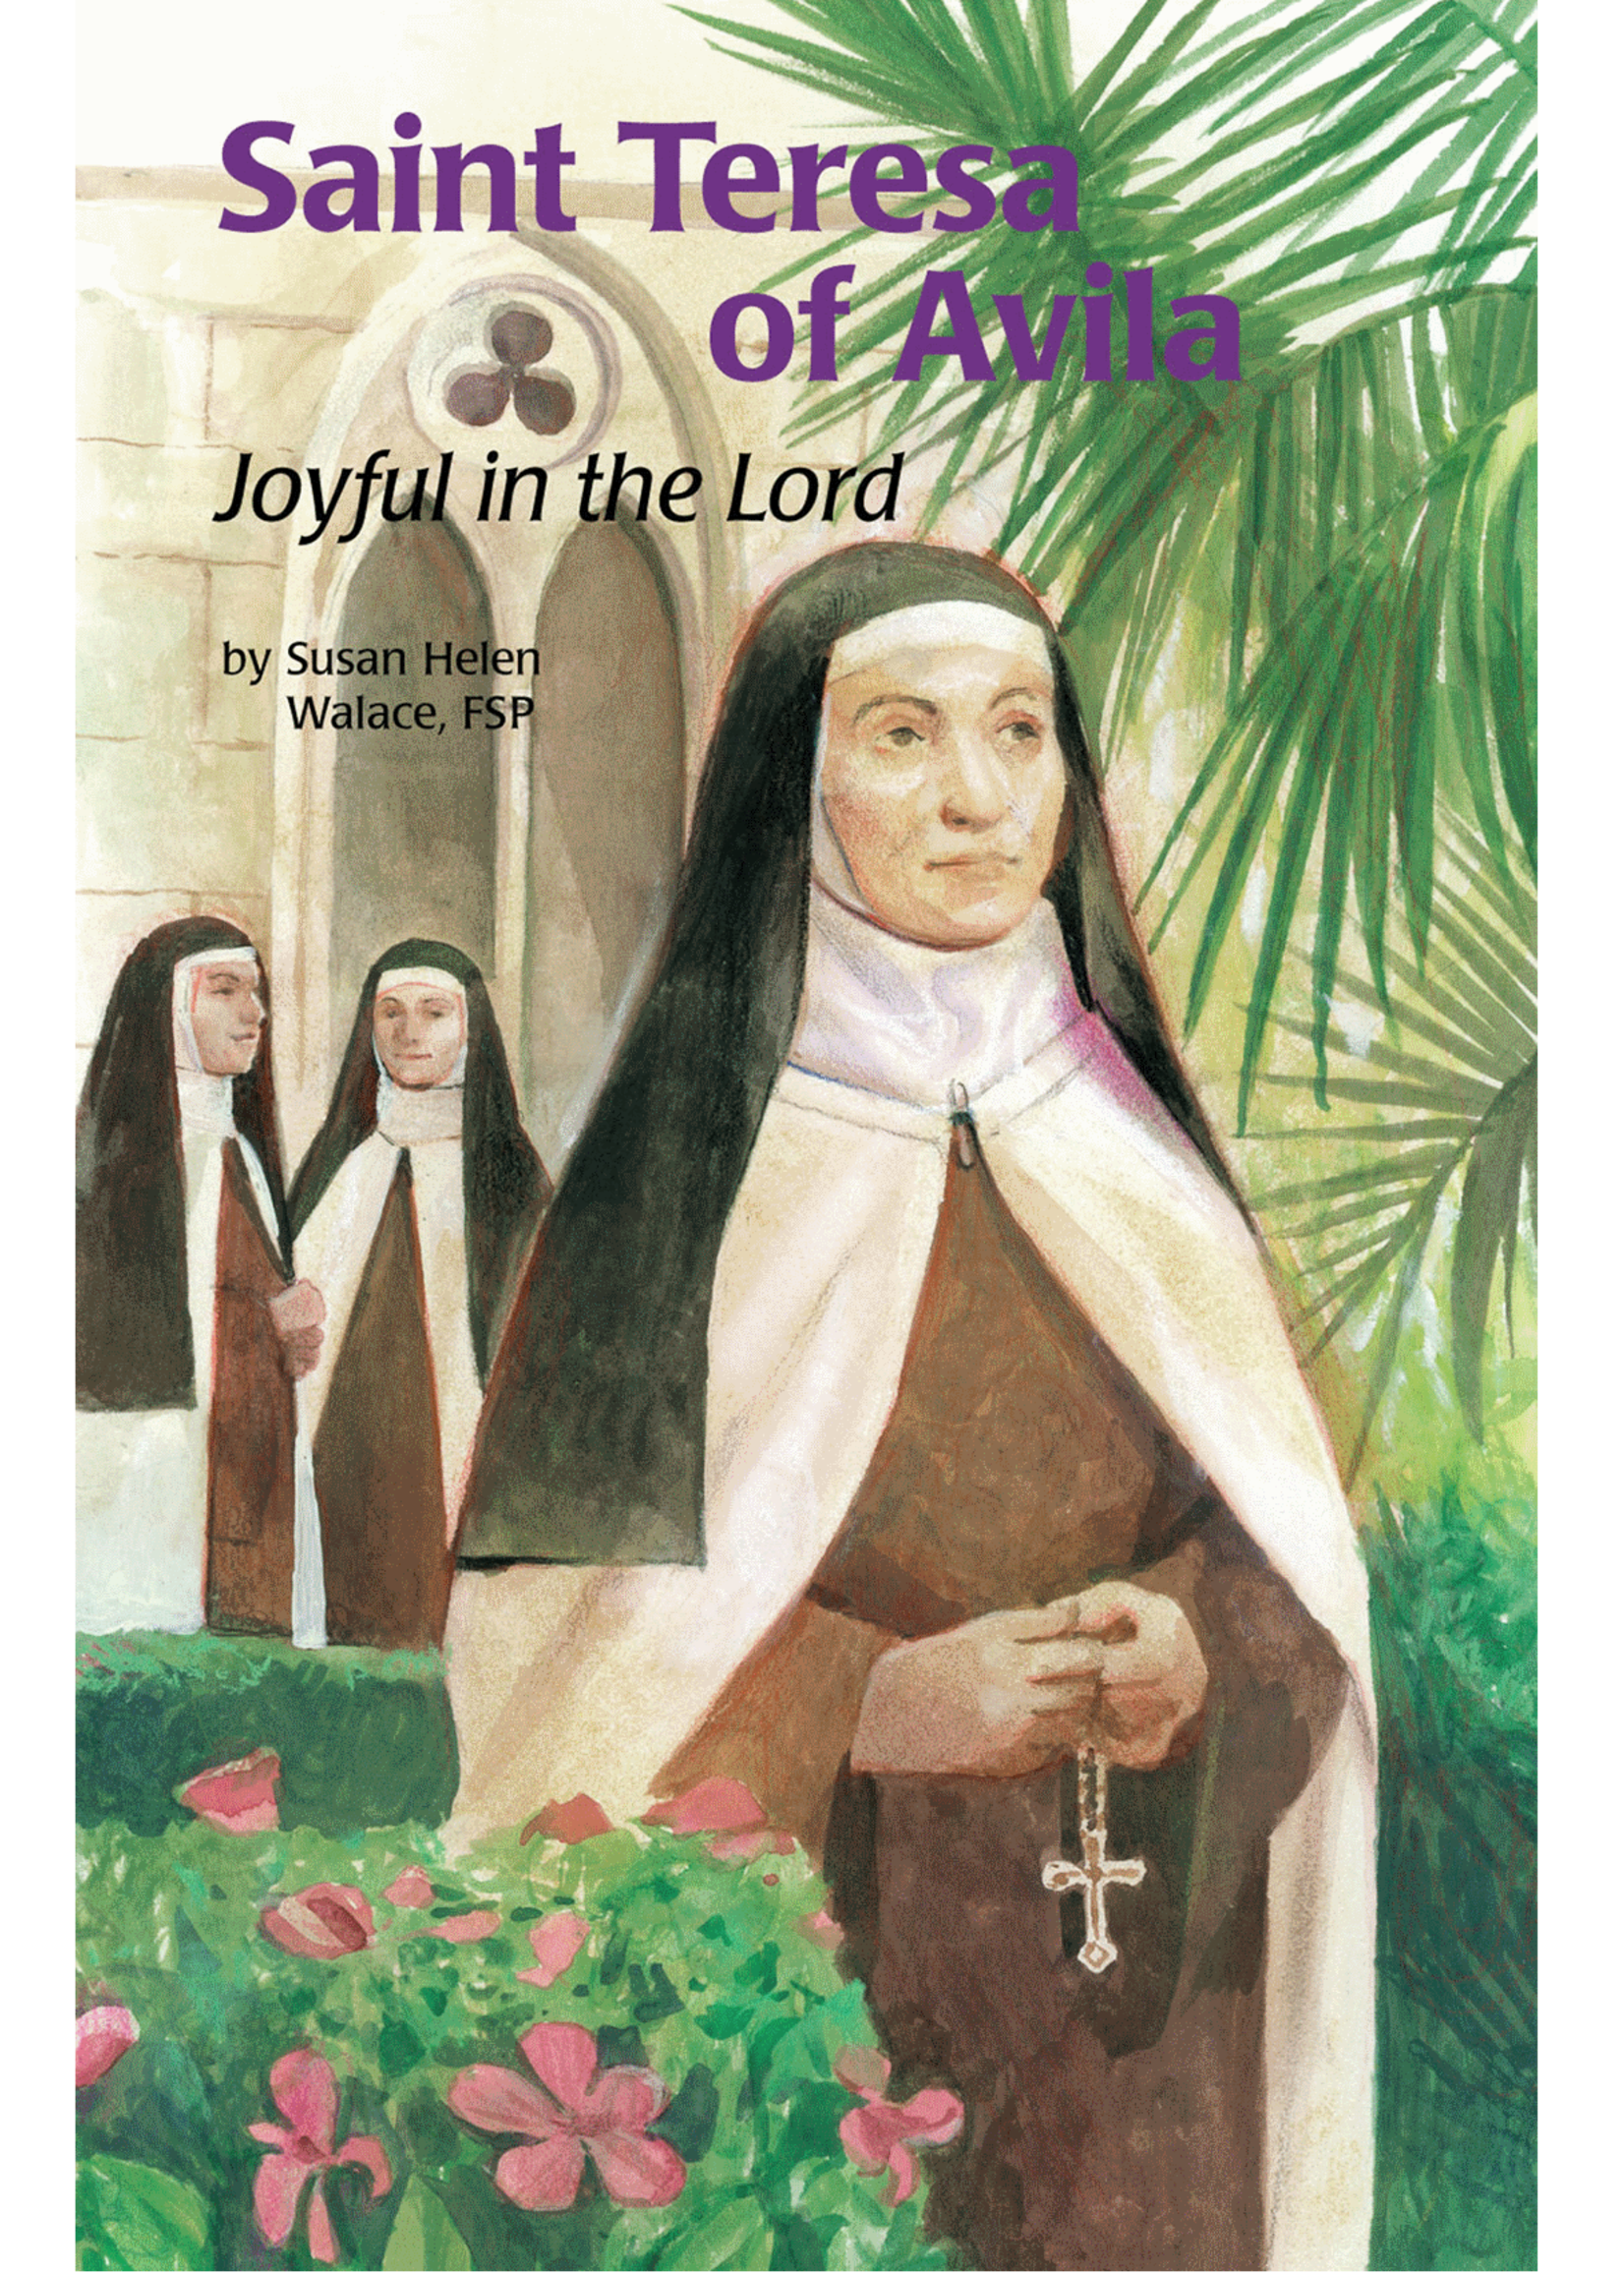 Encounter the Saints Saint Teresa of Avila - Joyful in the Lord